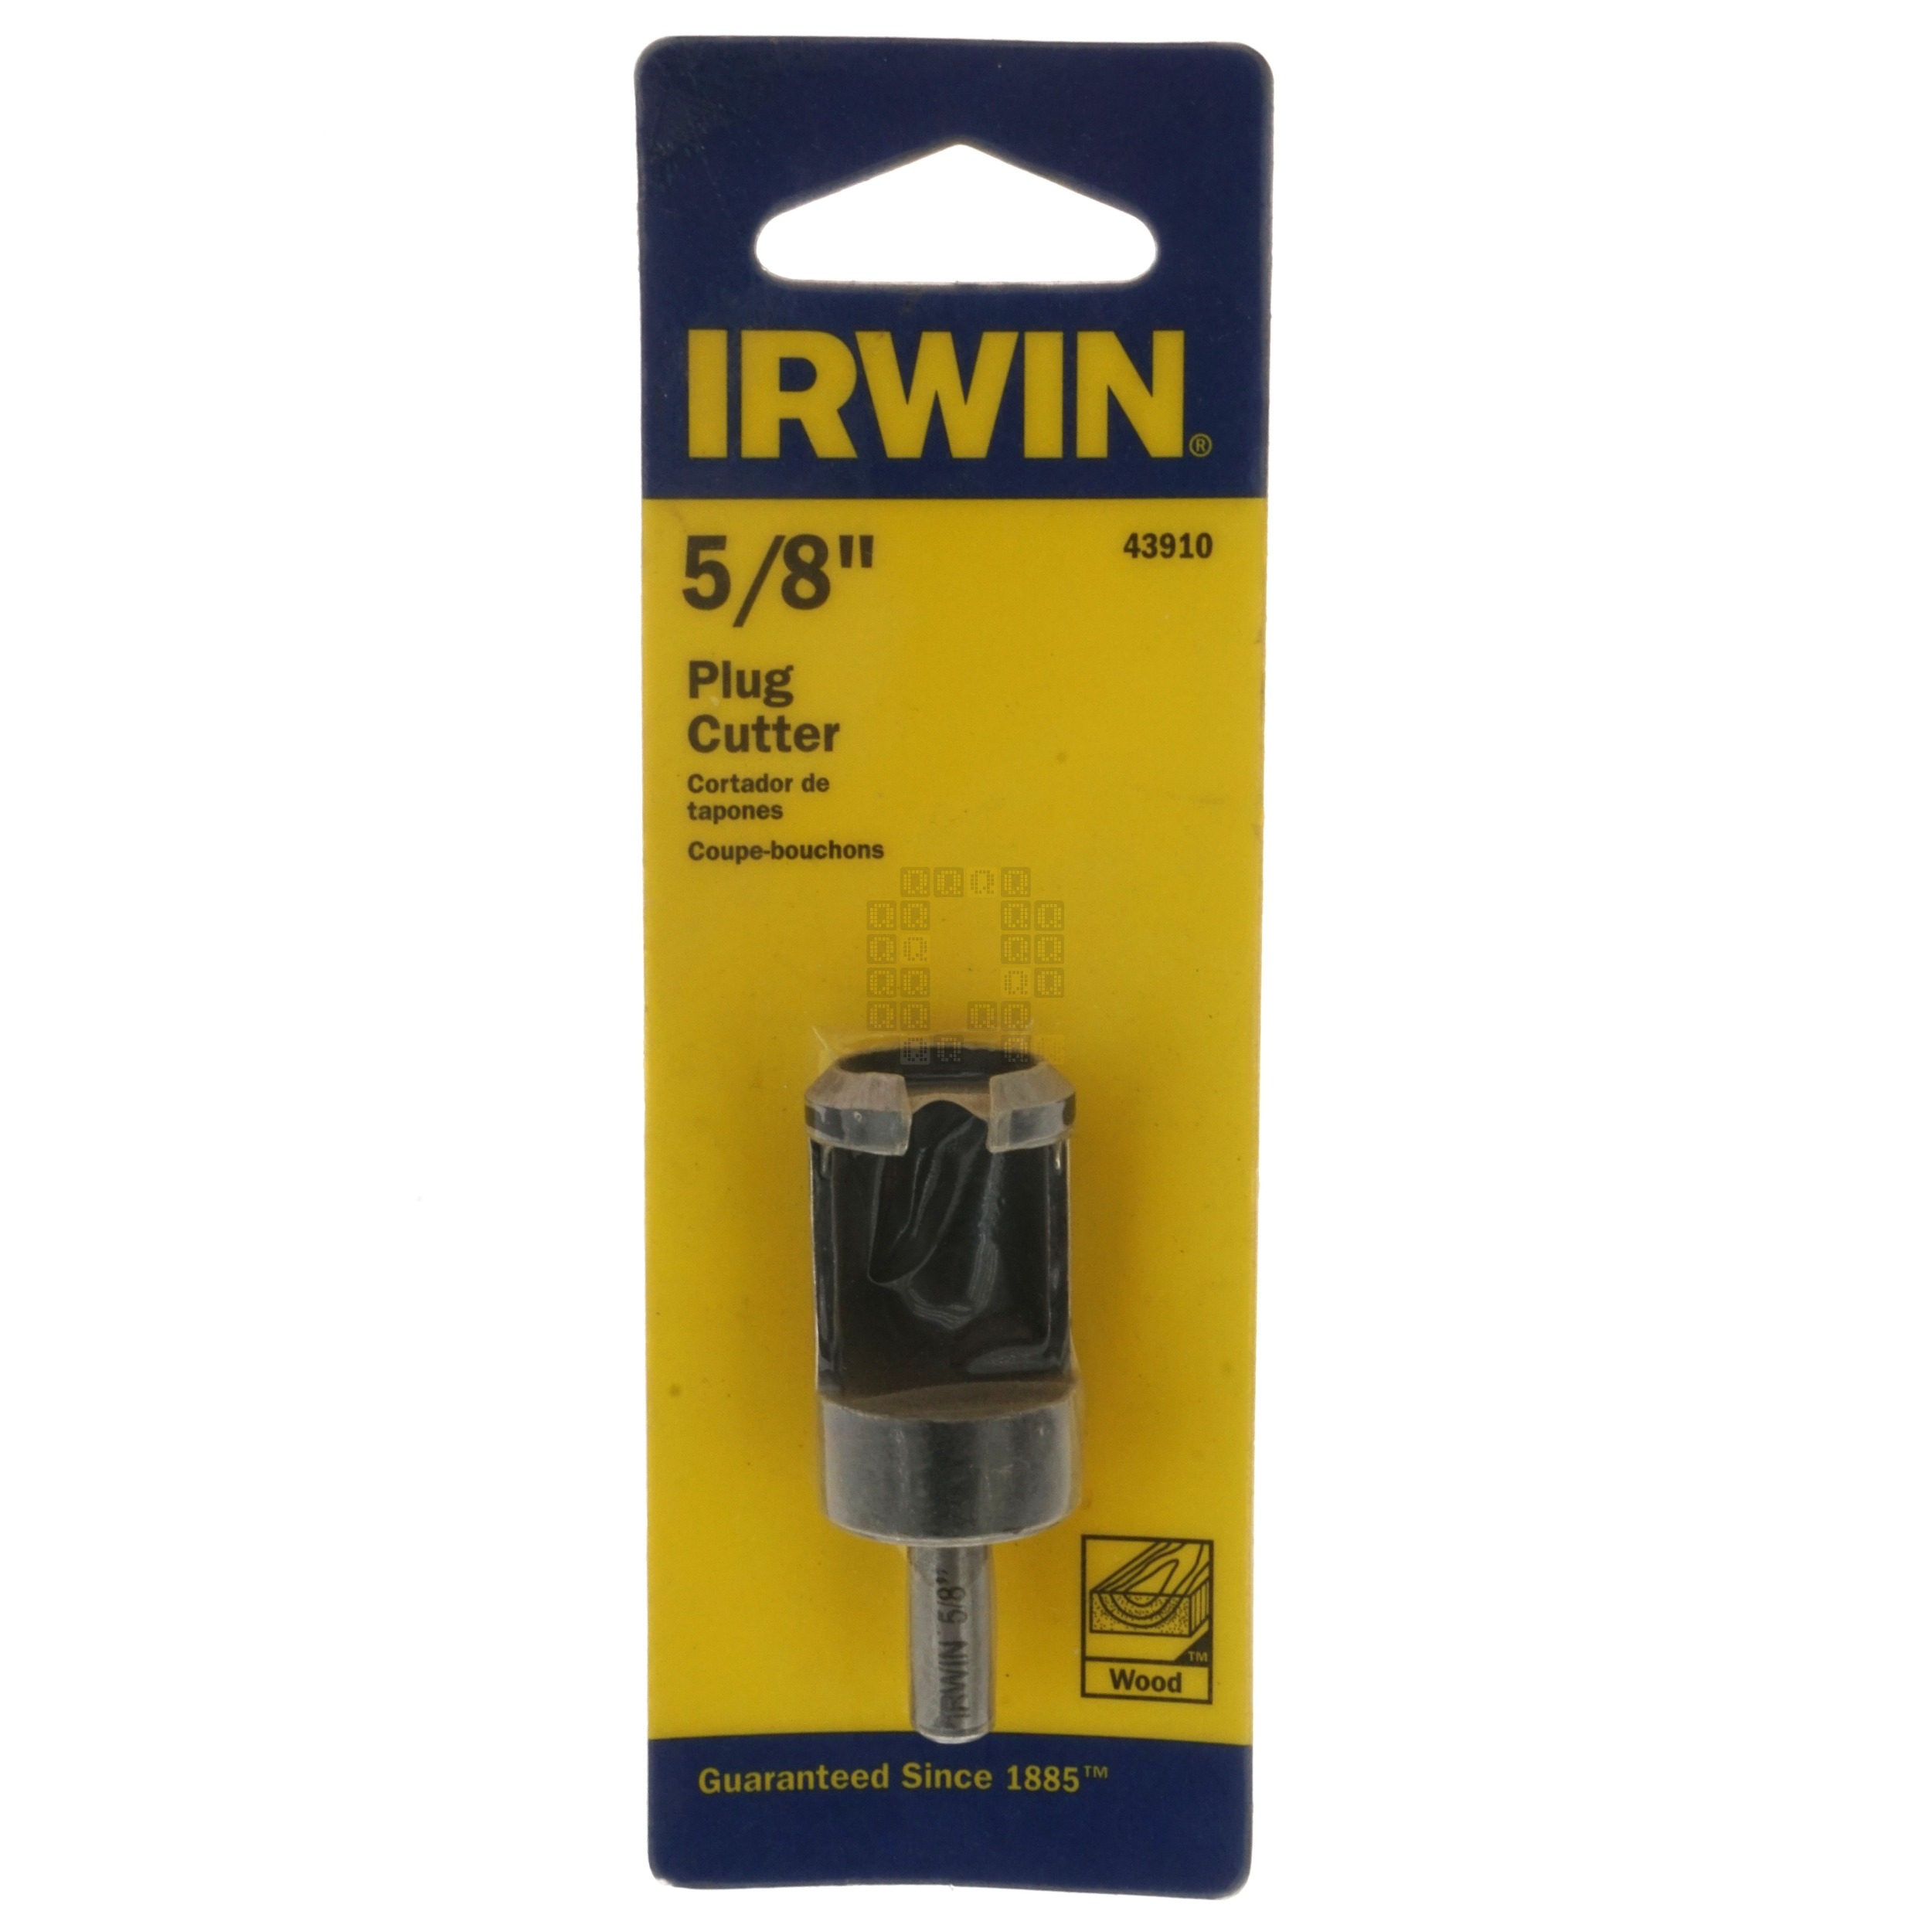 Irwin 43910 5/8" Carbon Steel Plug Cutter